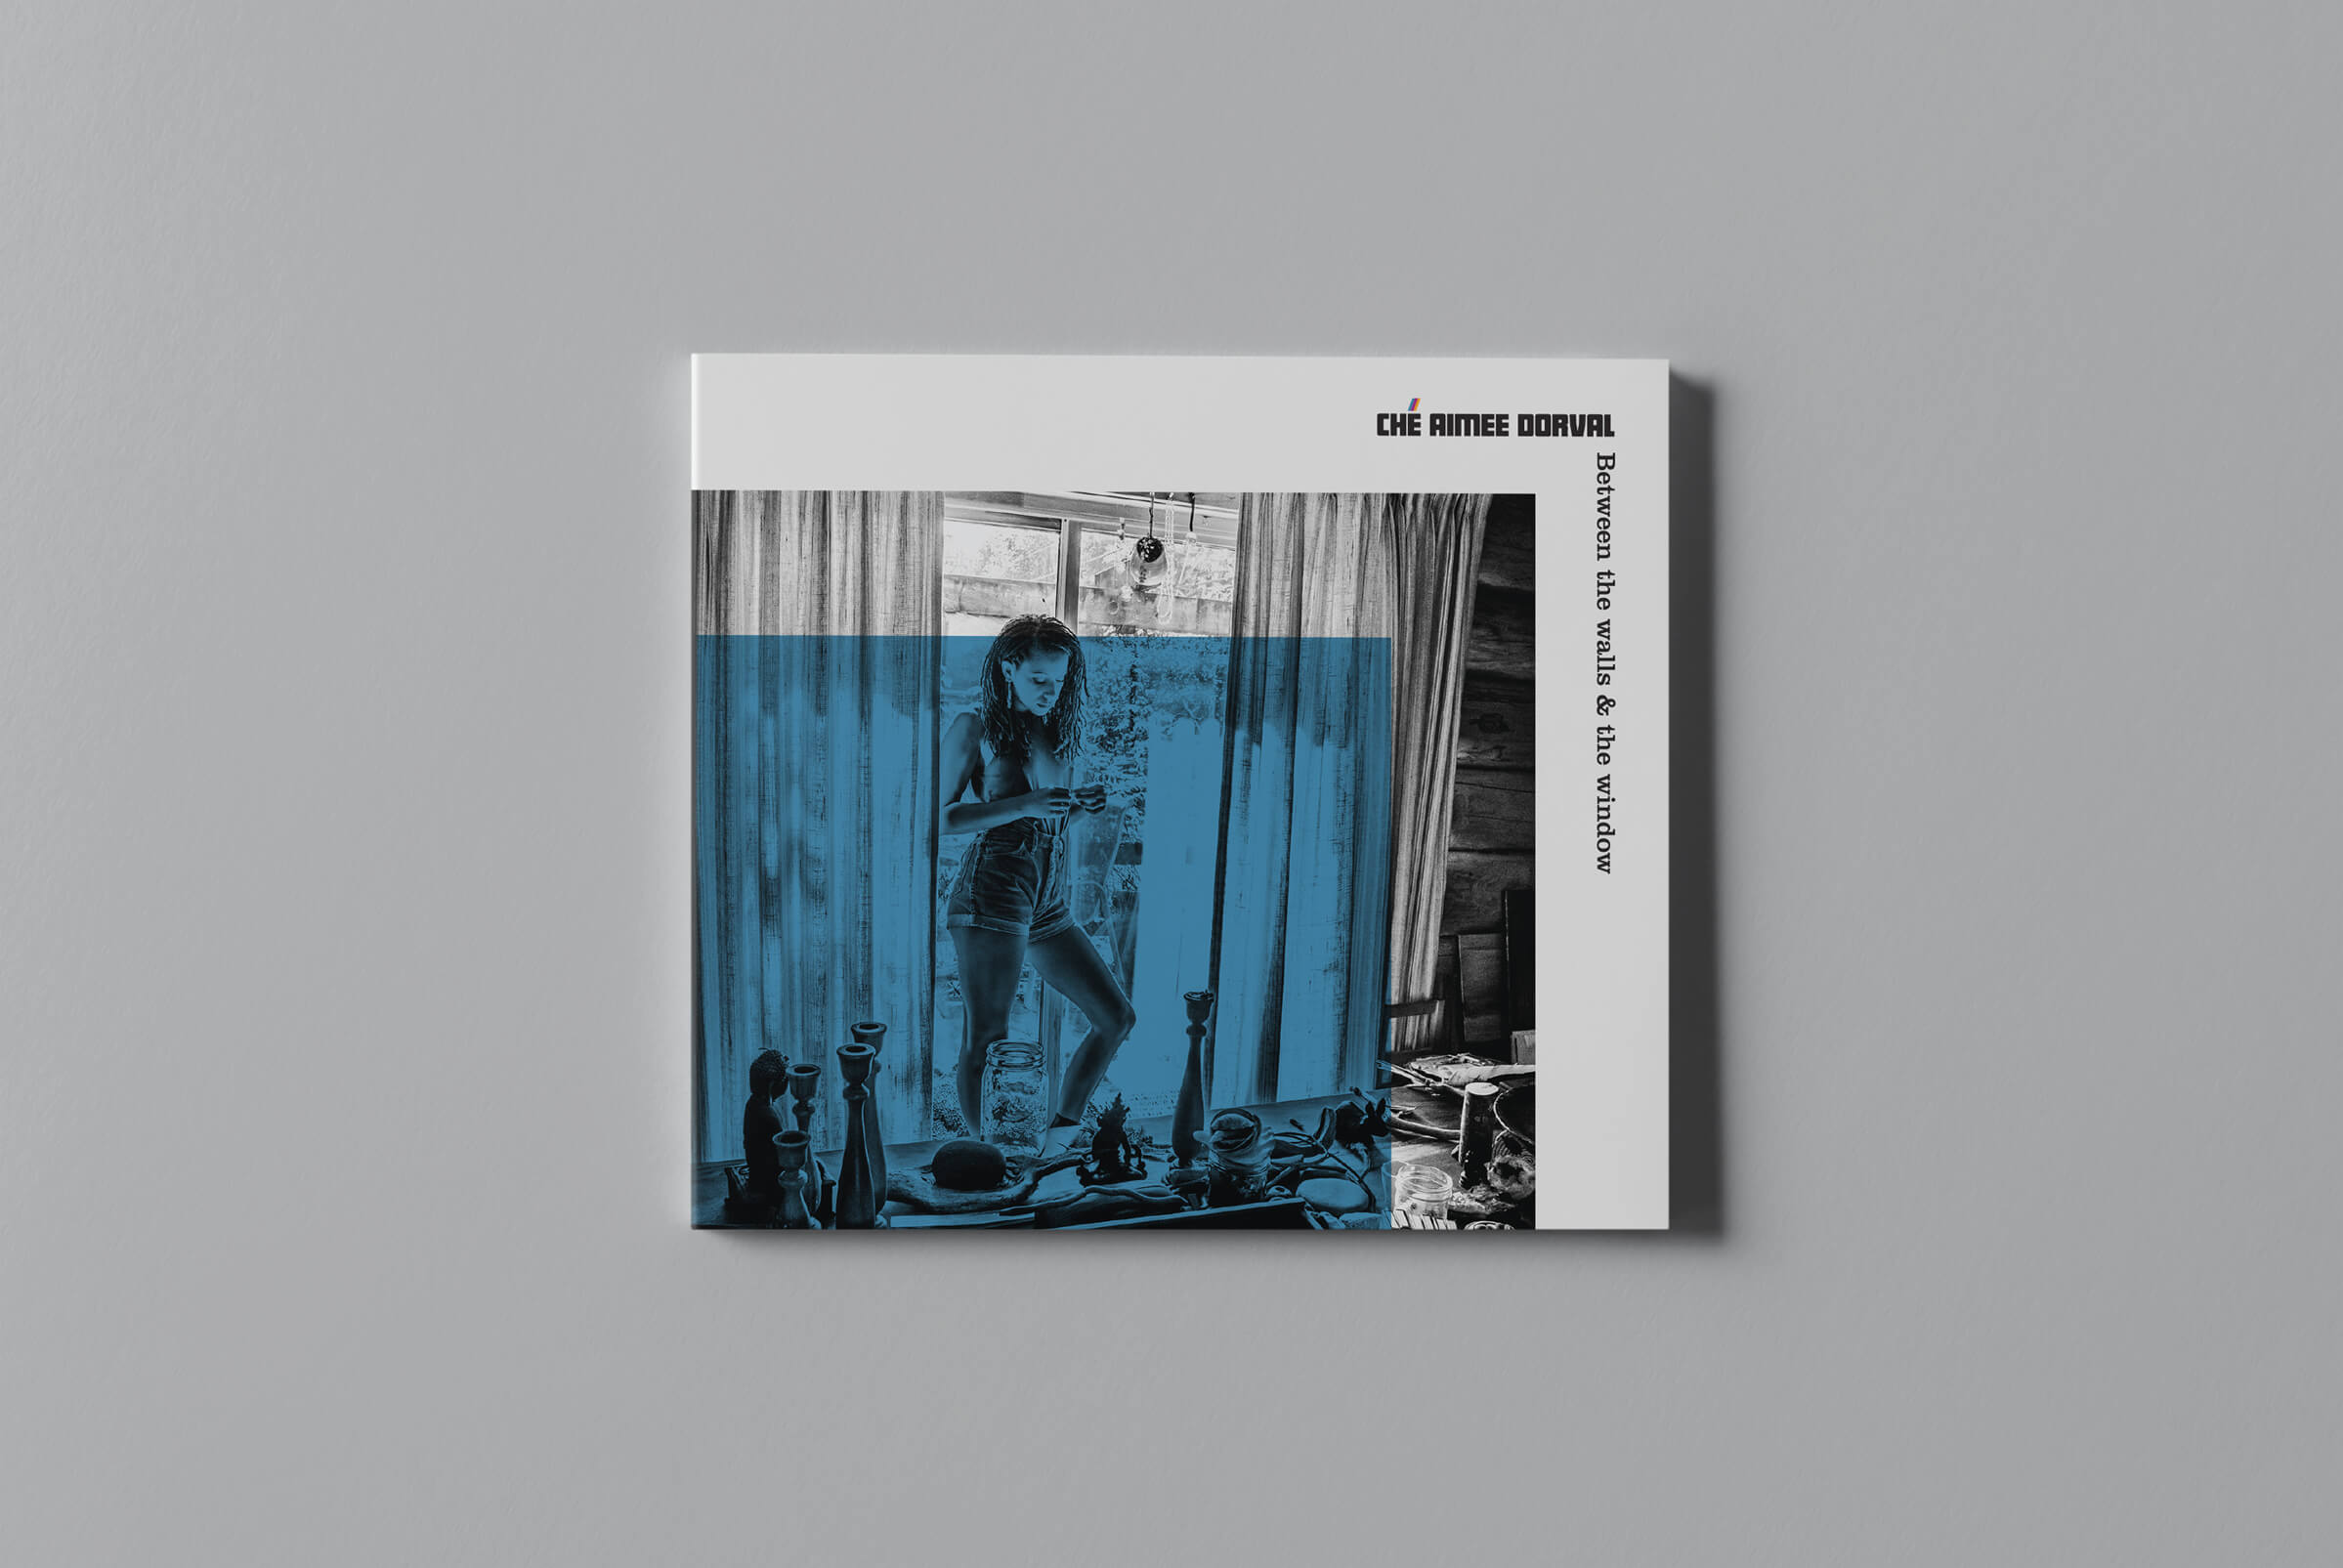 CD Album artwork cover for Ché Aimee Dorval by Ottawa graphic designer idApostle